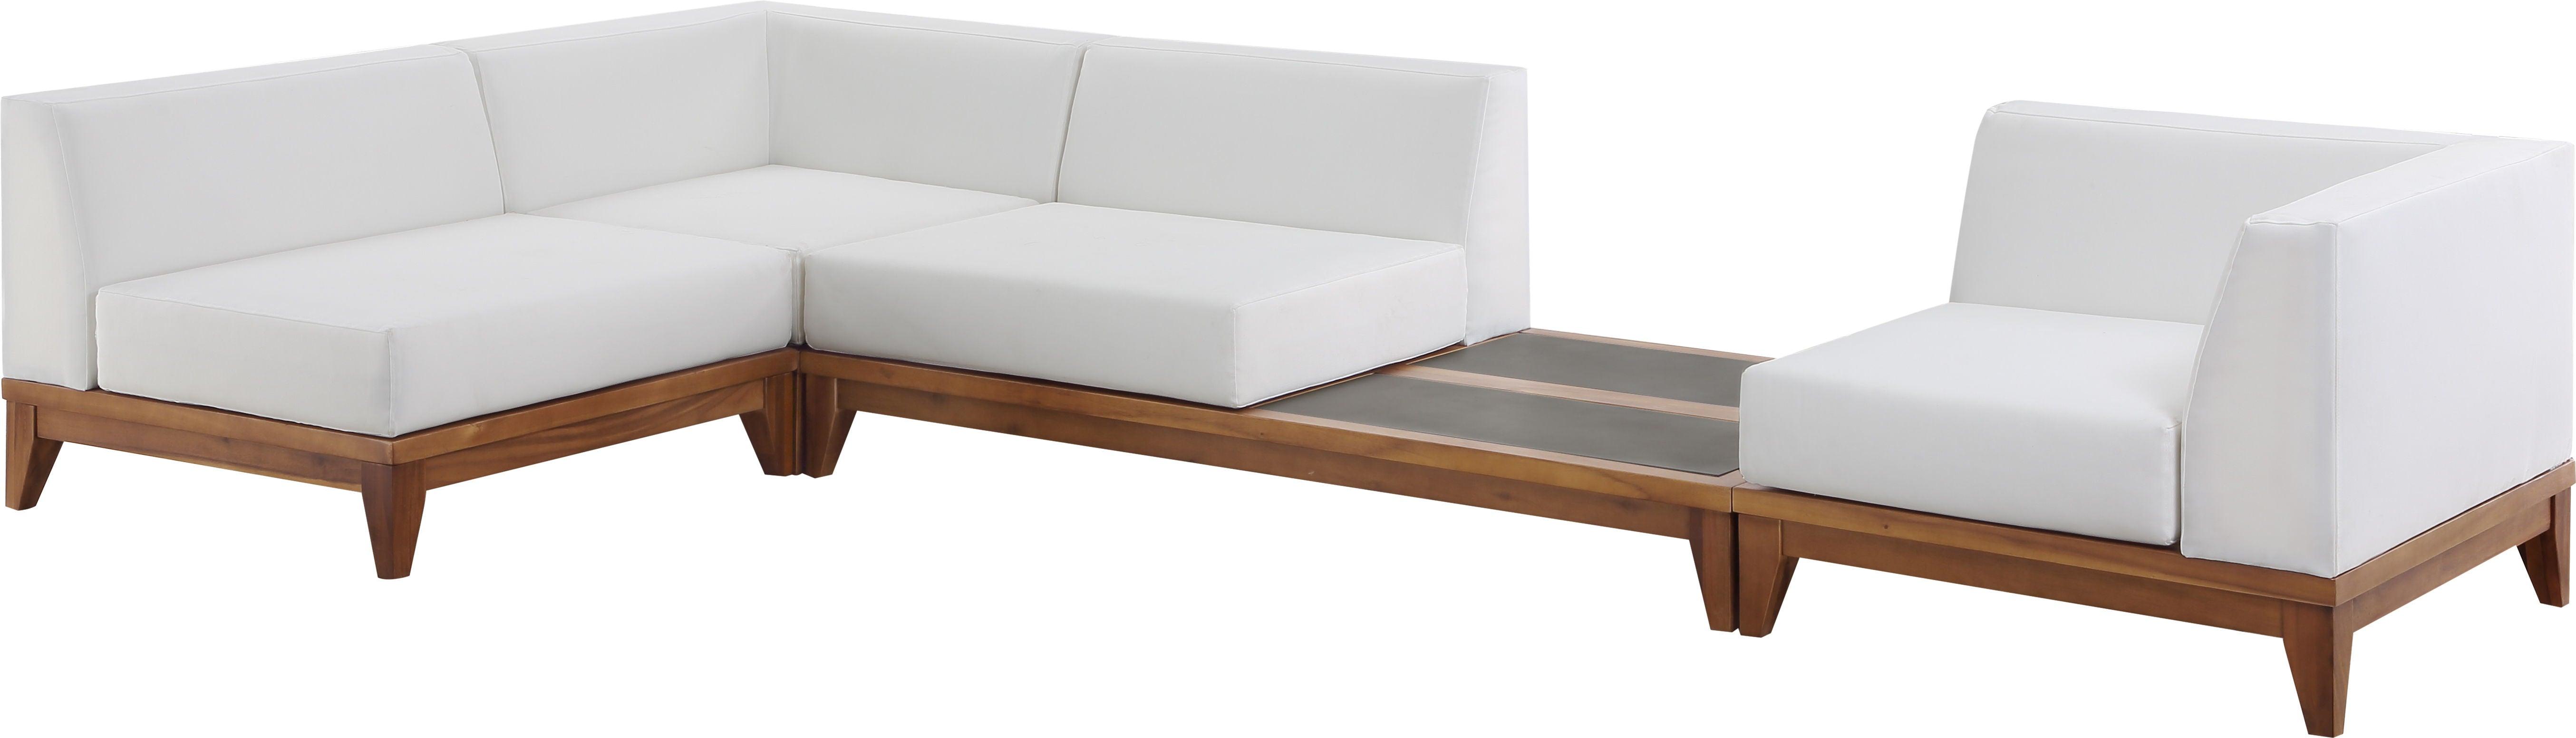 Meridian Furniture - Rio - 4 Piece Modular Sectional - Off White - 5th Avenue Furniture